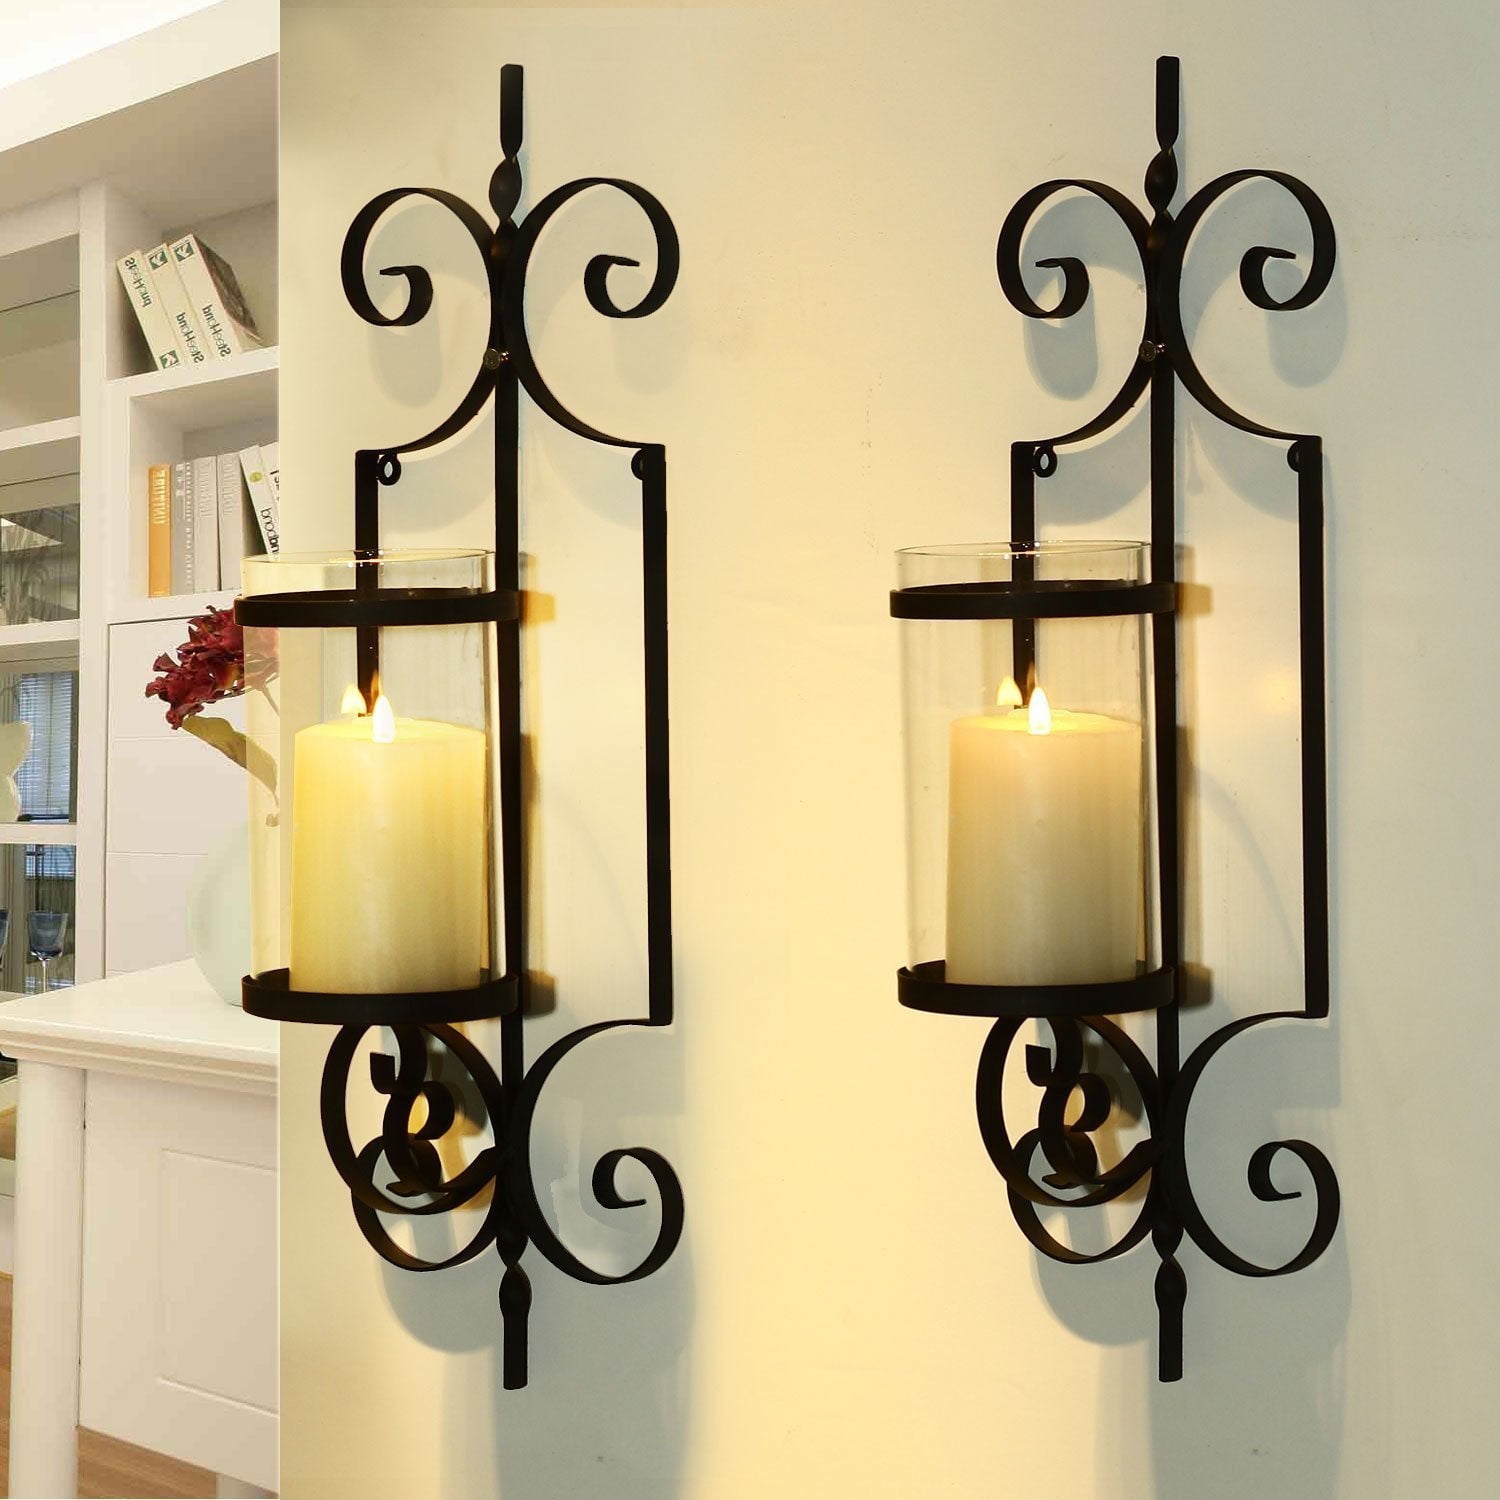 Pillar LED Tealight Hanging Candle Lantern Home Decor Wall Accent Decoration 